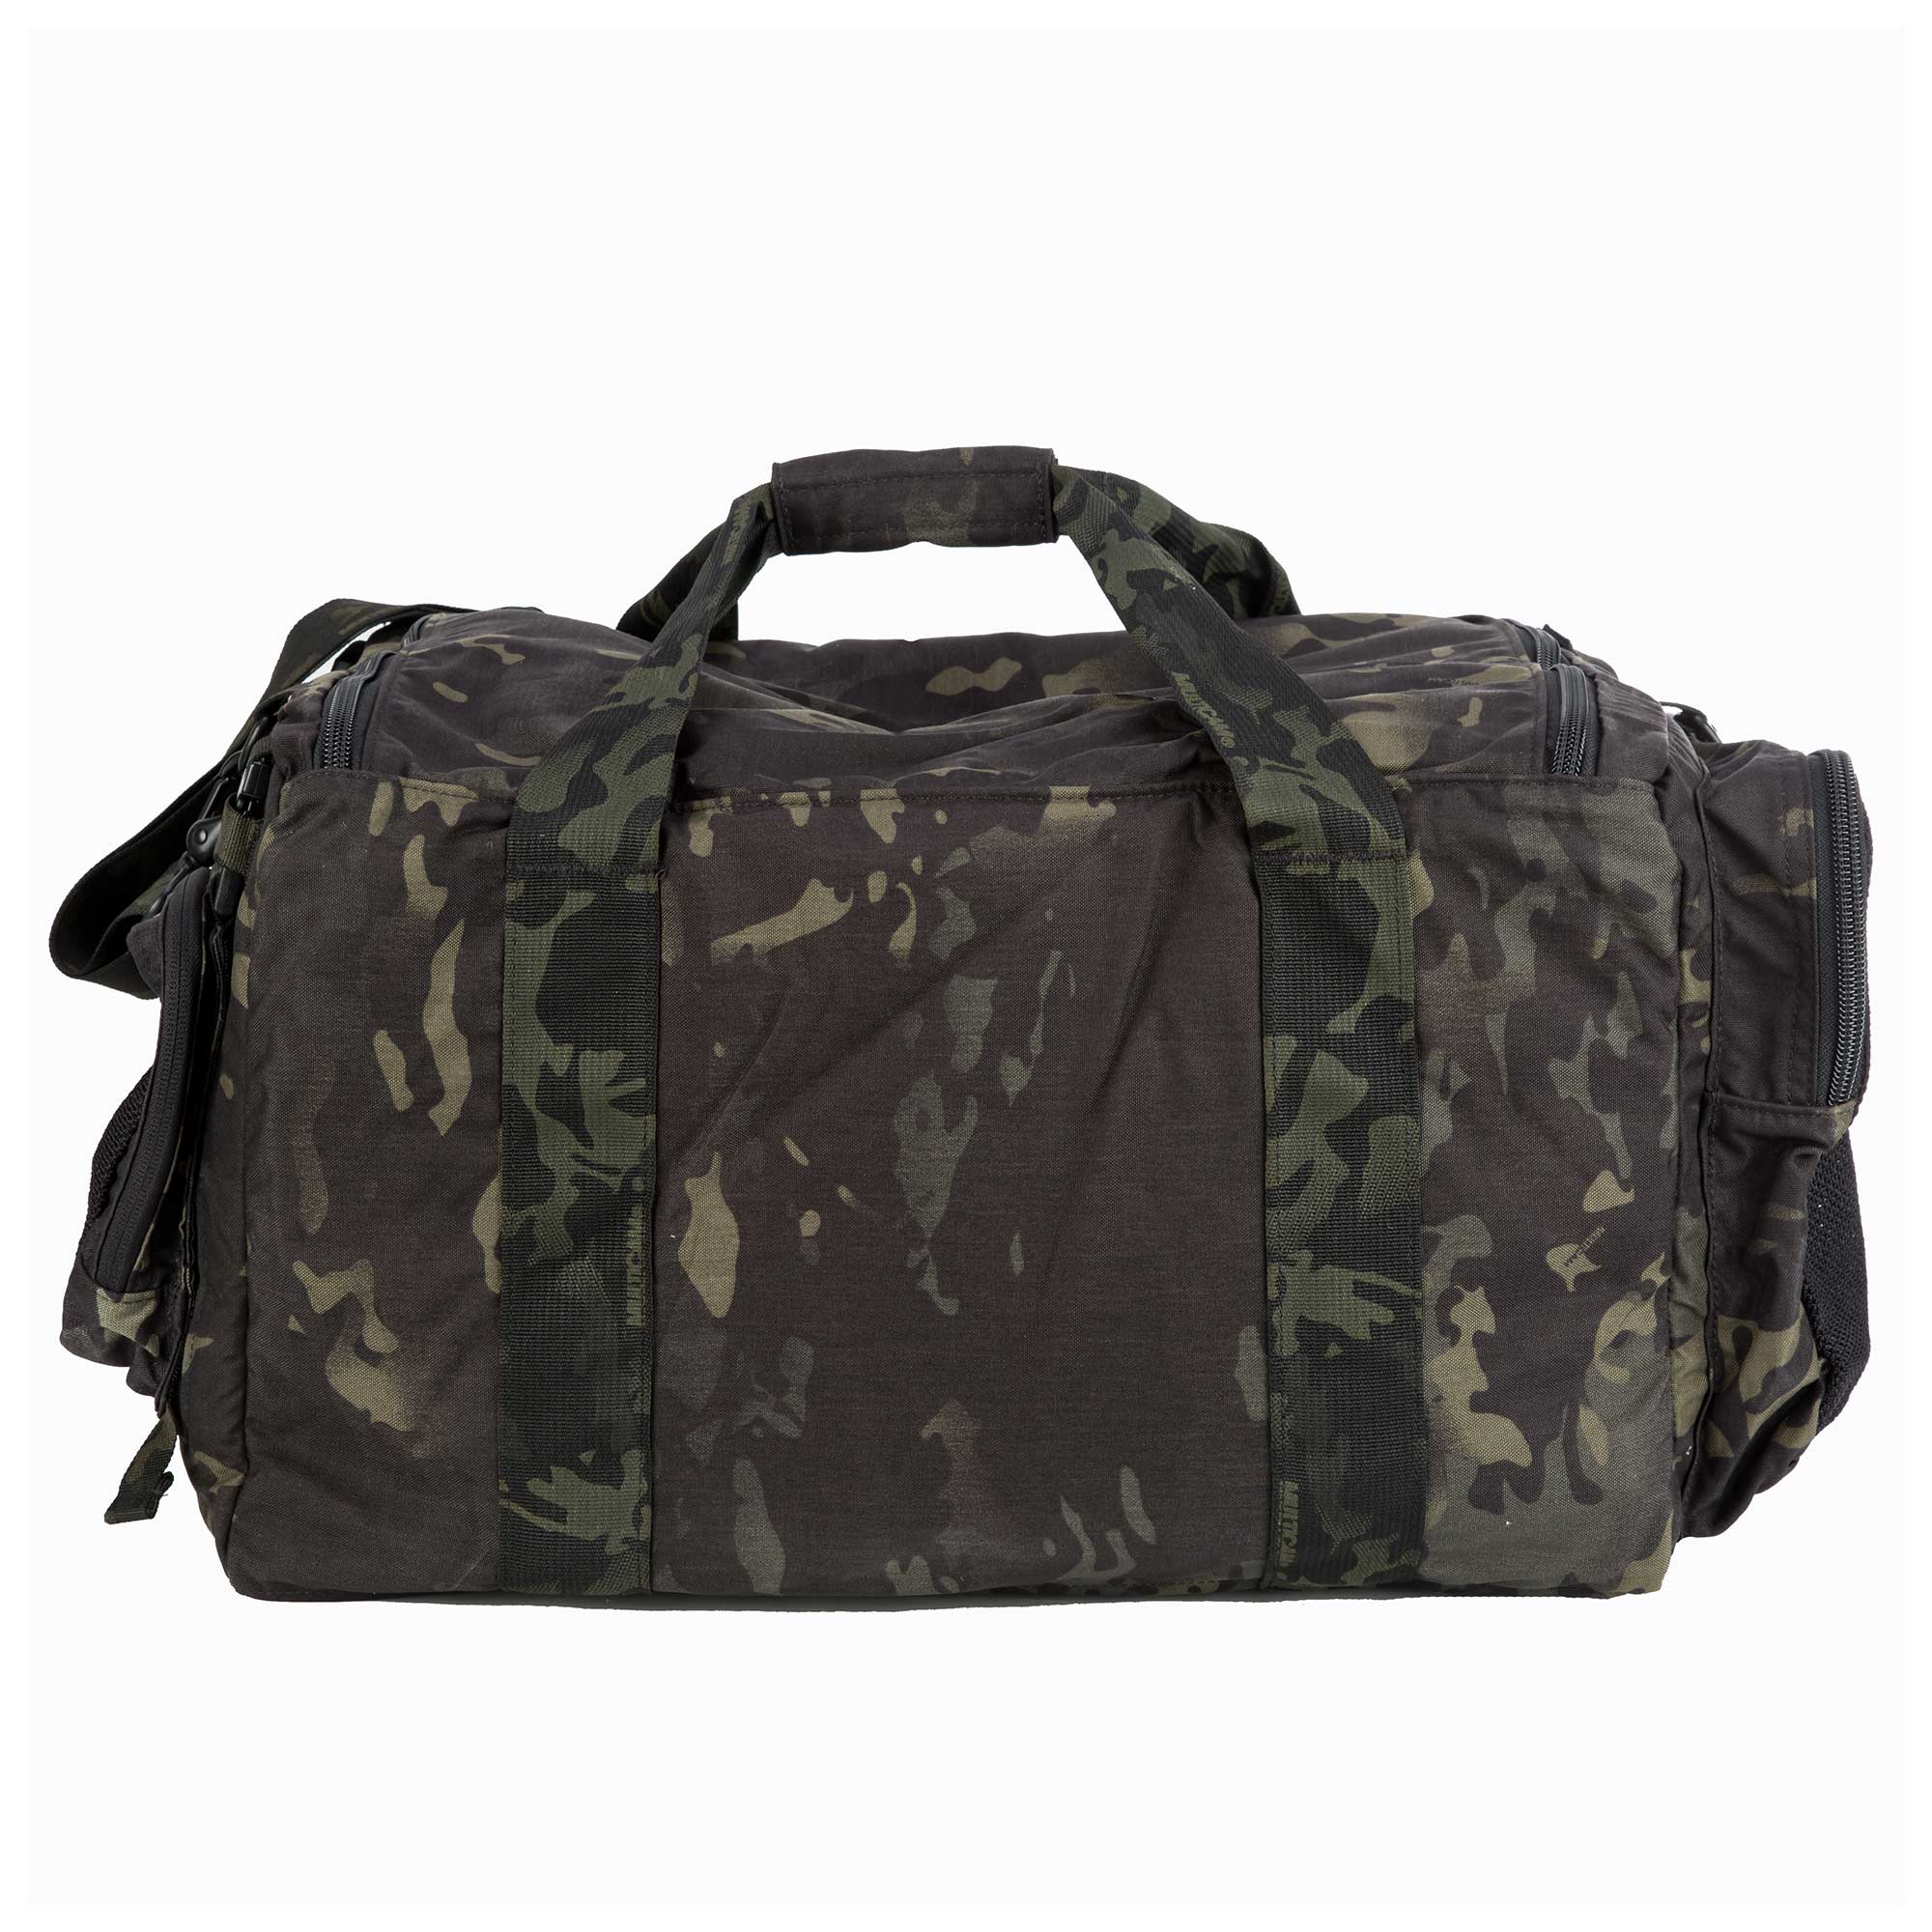 Purchase the LBX MAP Duffle Bag multicam black by ASMC